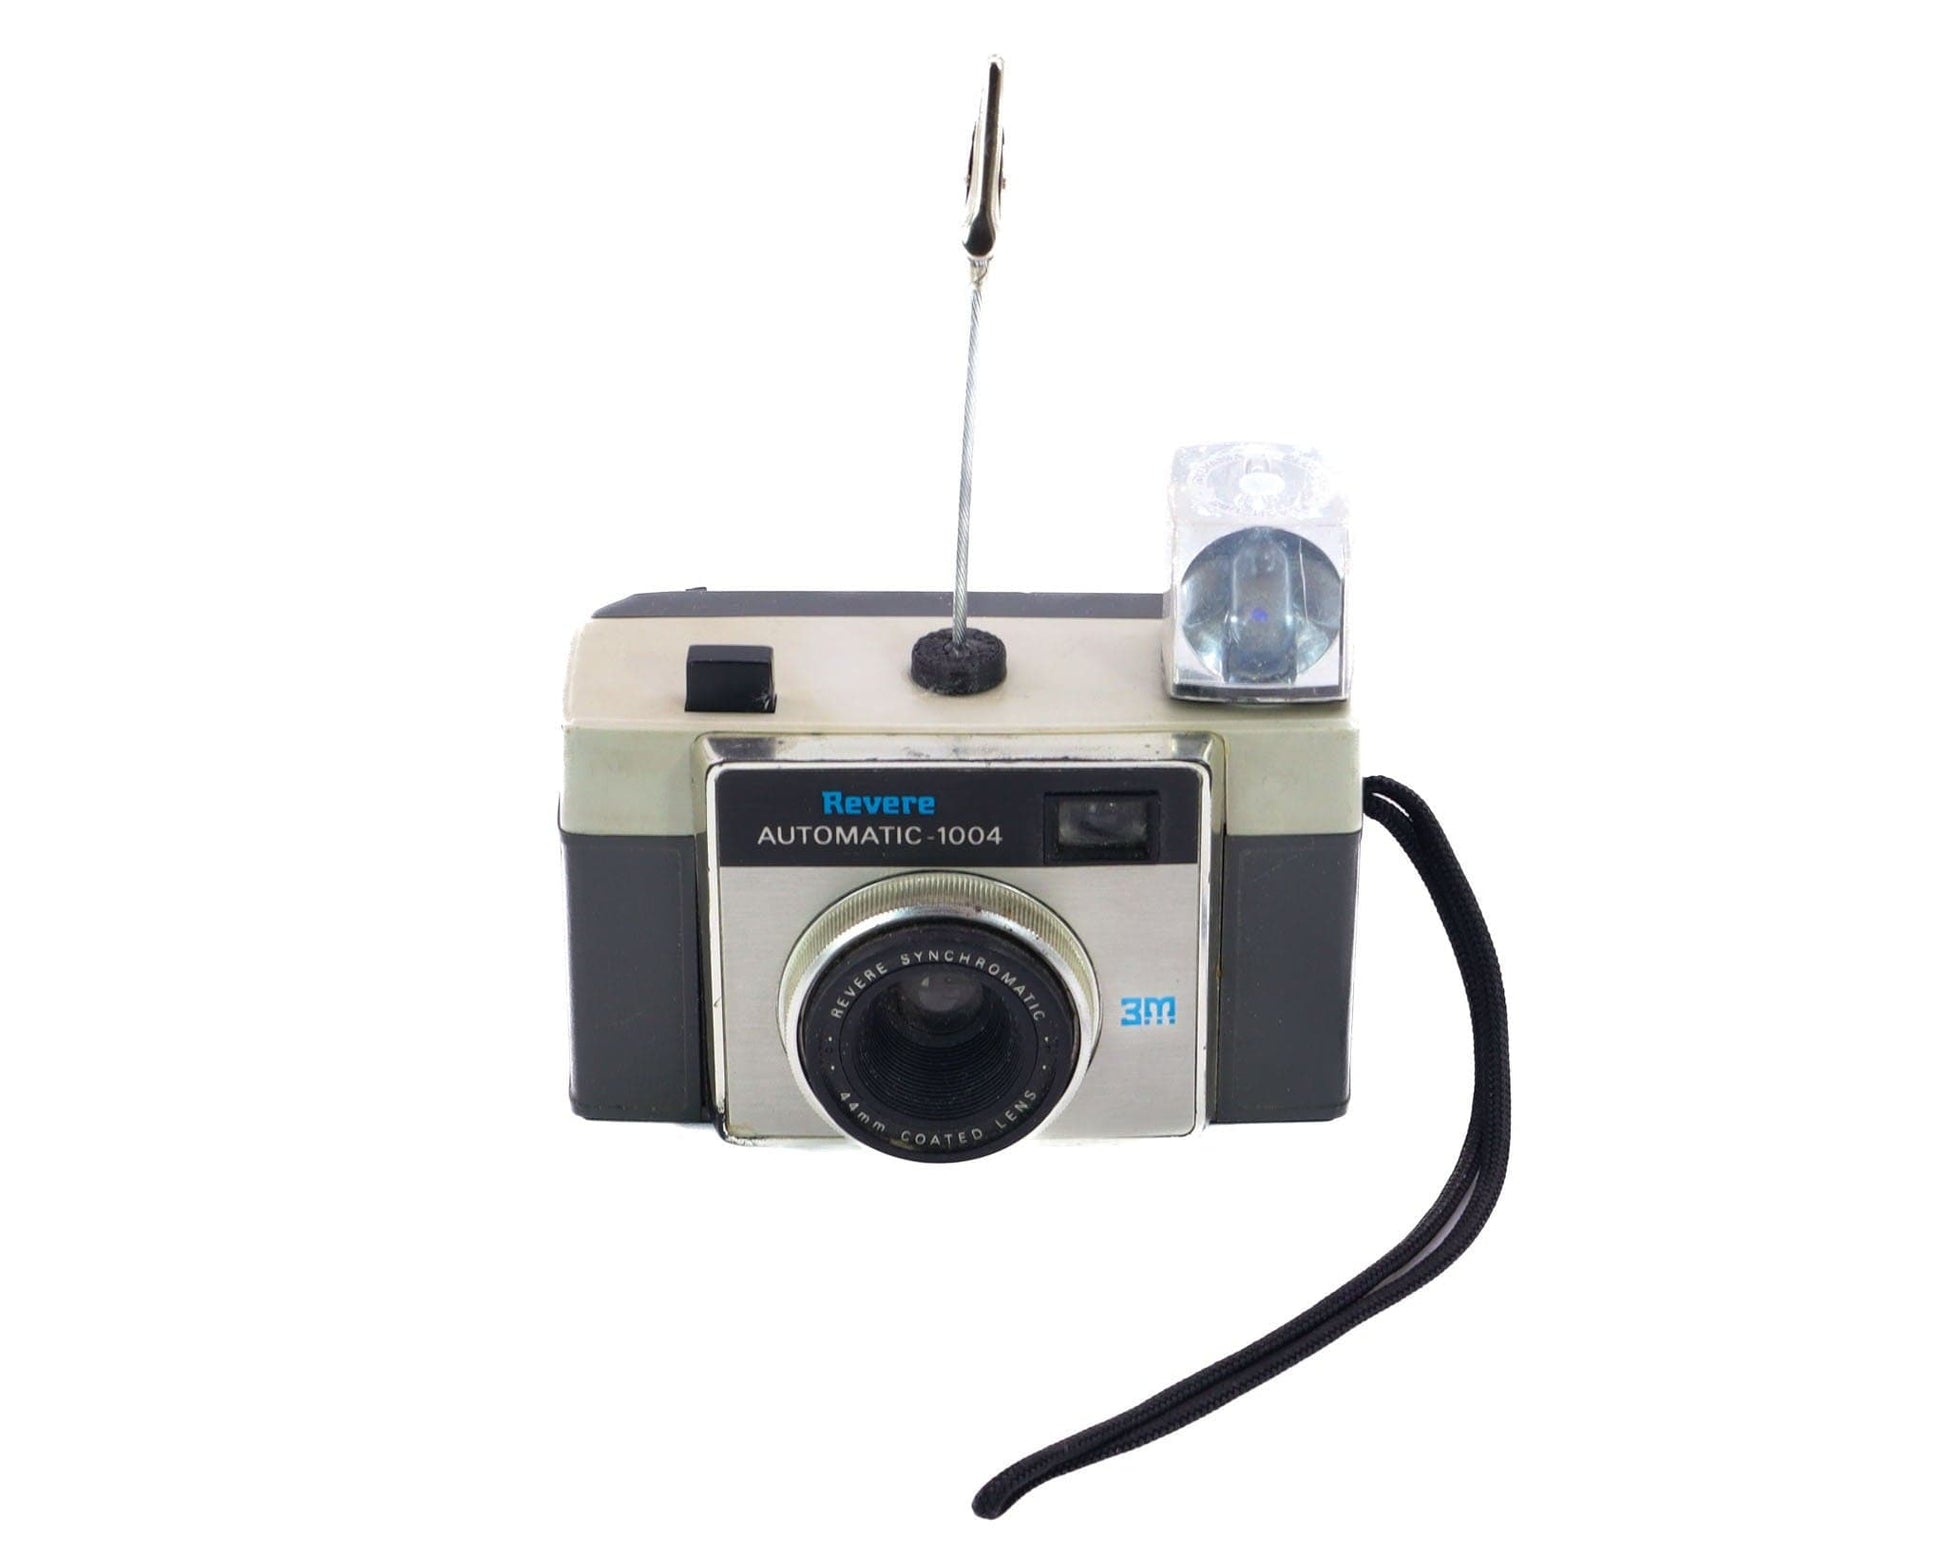 LightAndTimeArt Photo Holder Vintage Camera Photo Holder - Revere 3M Automatic 1004 Camera